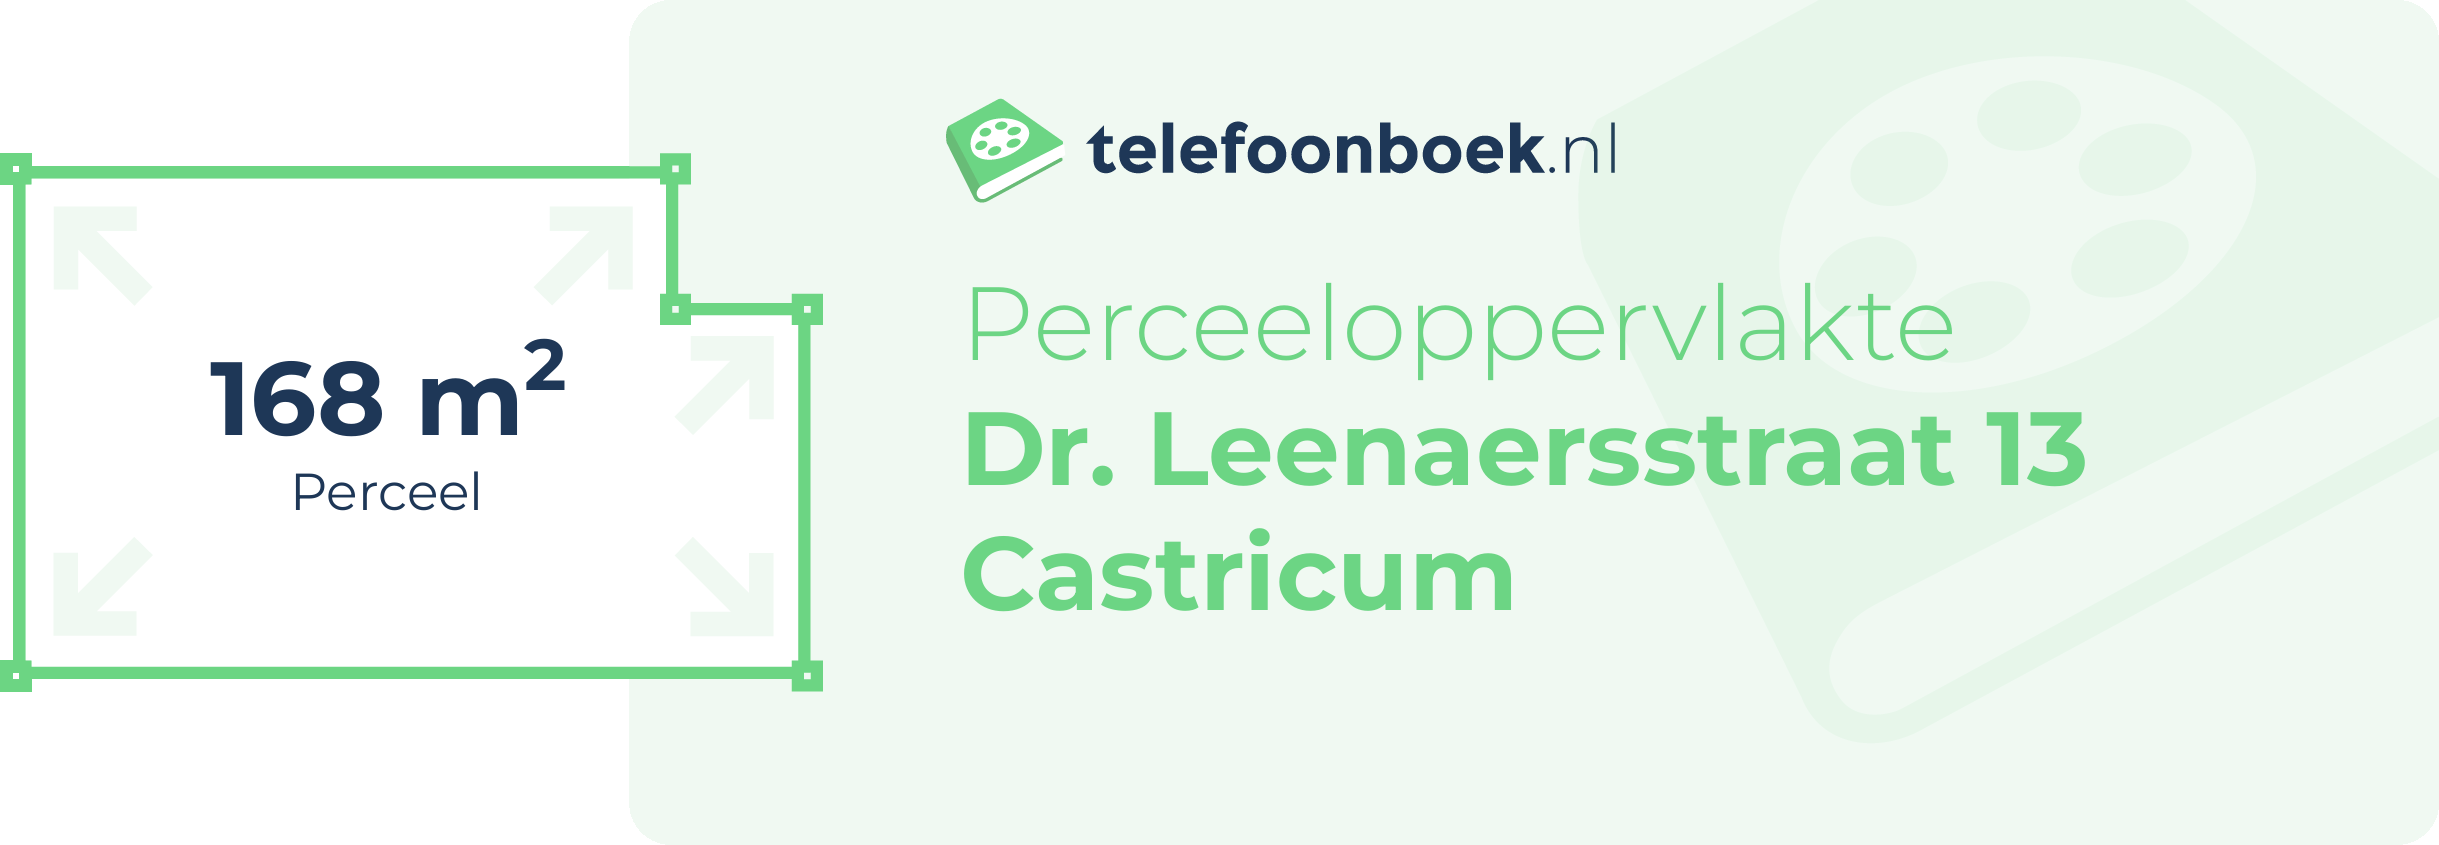 Perceeloppervlakte Dr. Leenaersstraat 13 Castricum